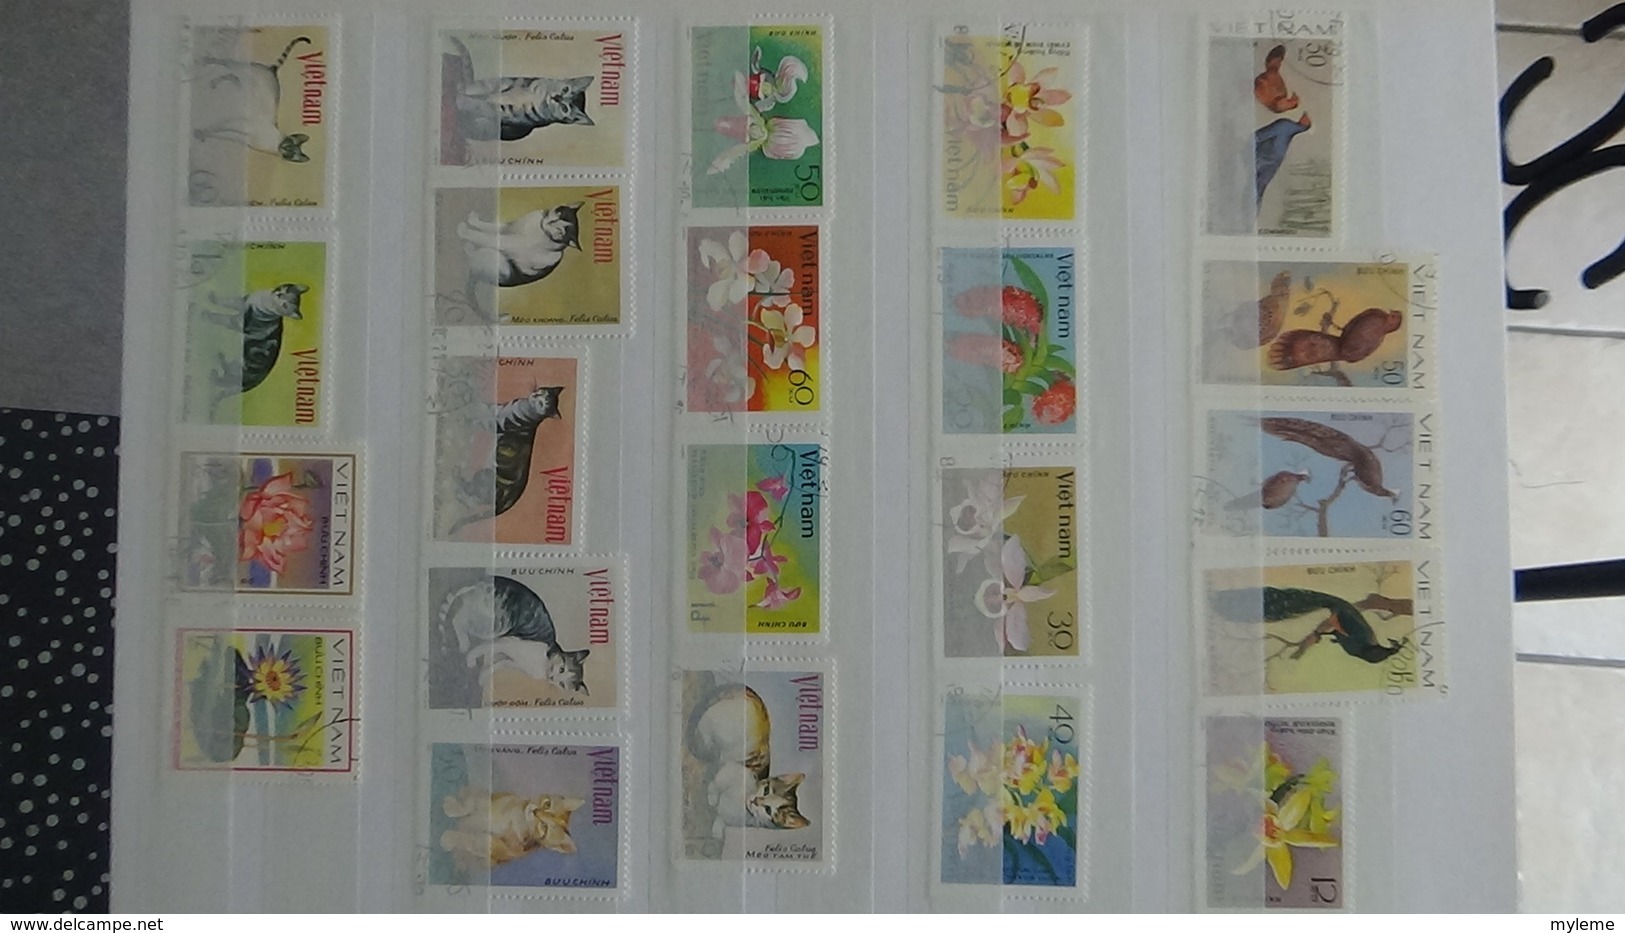 B383 Collection timbres oblitérés du Viet Nam. A saisir !!!